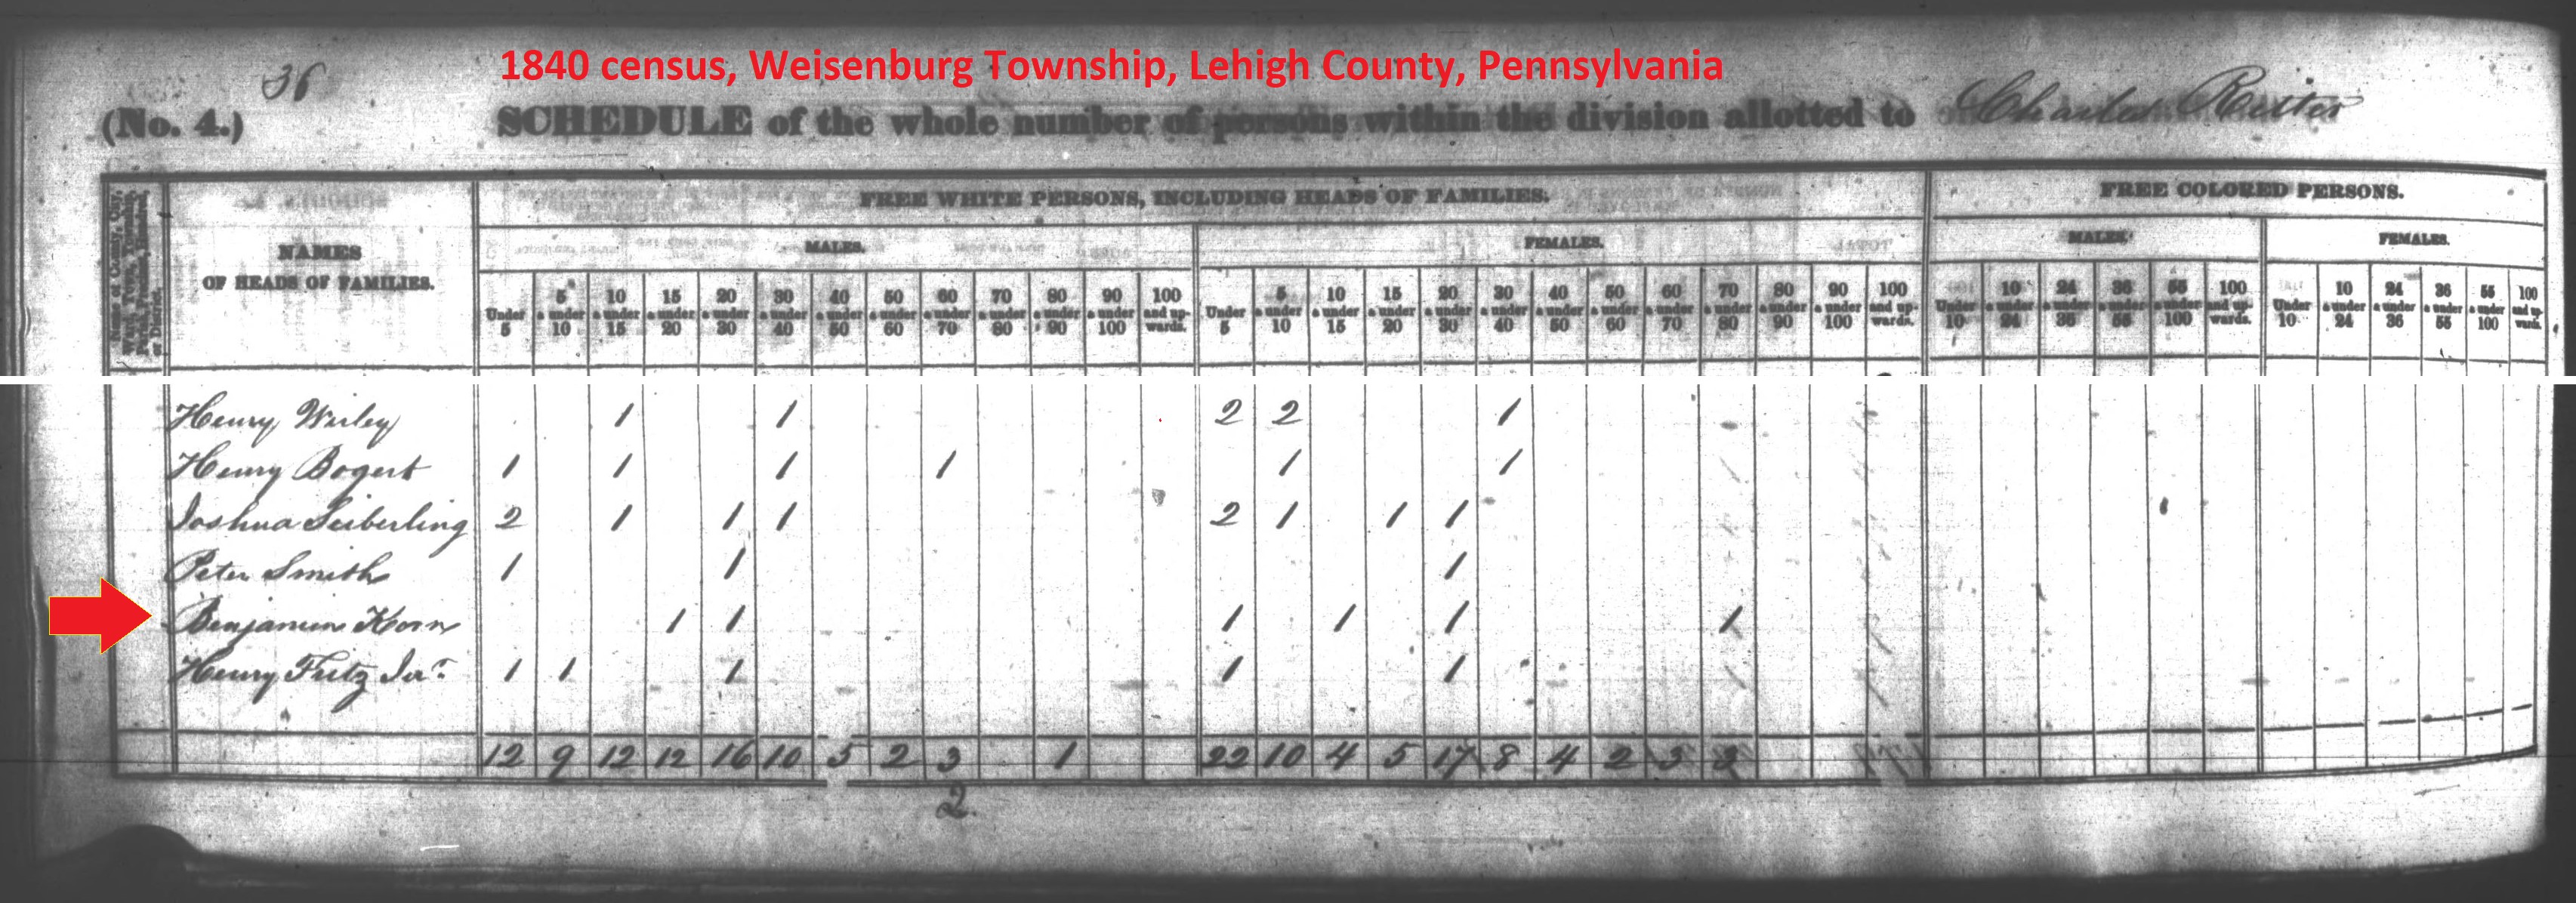 Benjamin Korn in the 1840 census of Weisenburg Township, Lehigh County, Pennsylvania.